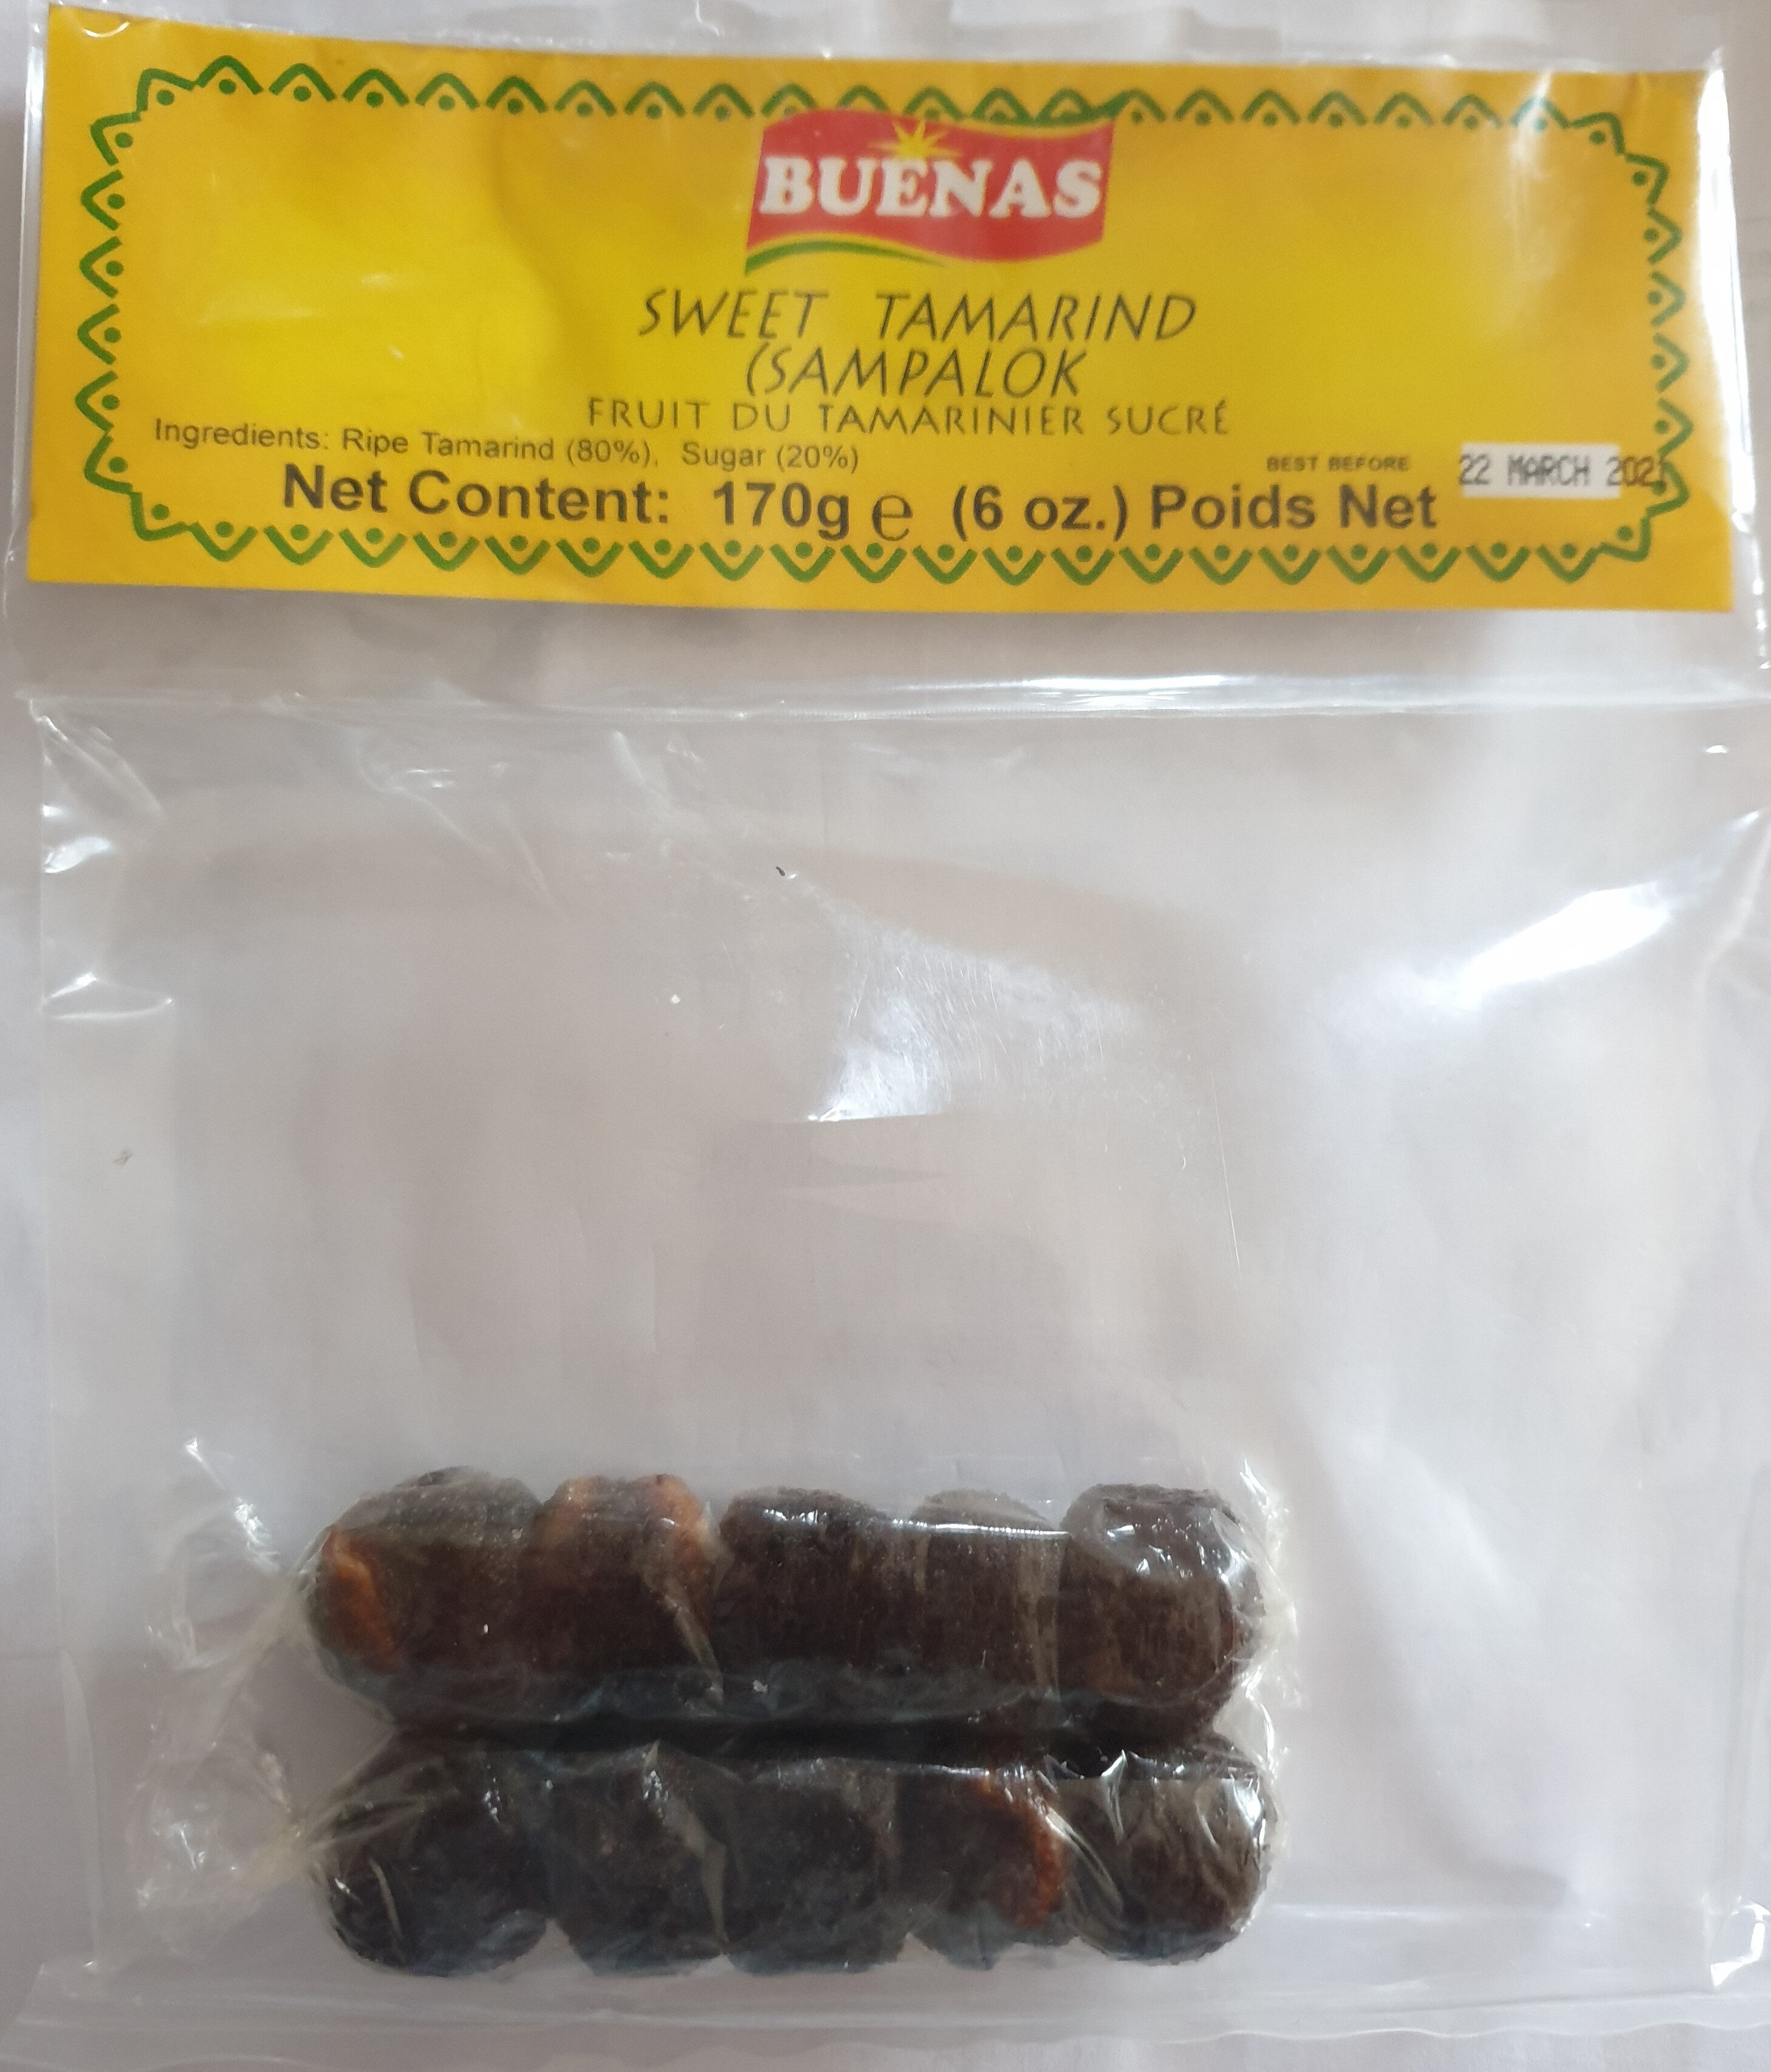 Sweet Tamarind (Sampalok) - Product